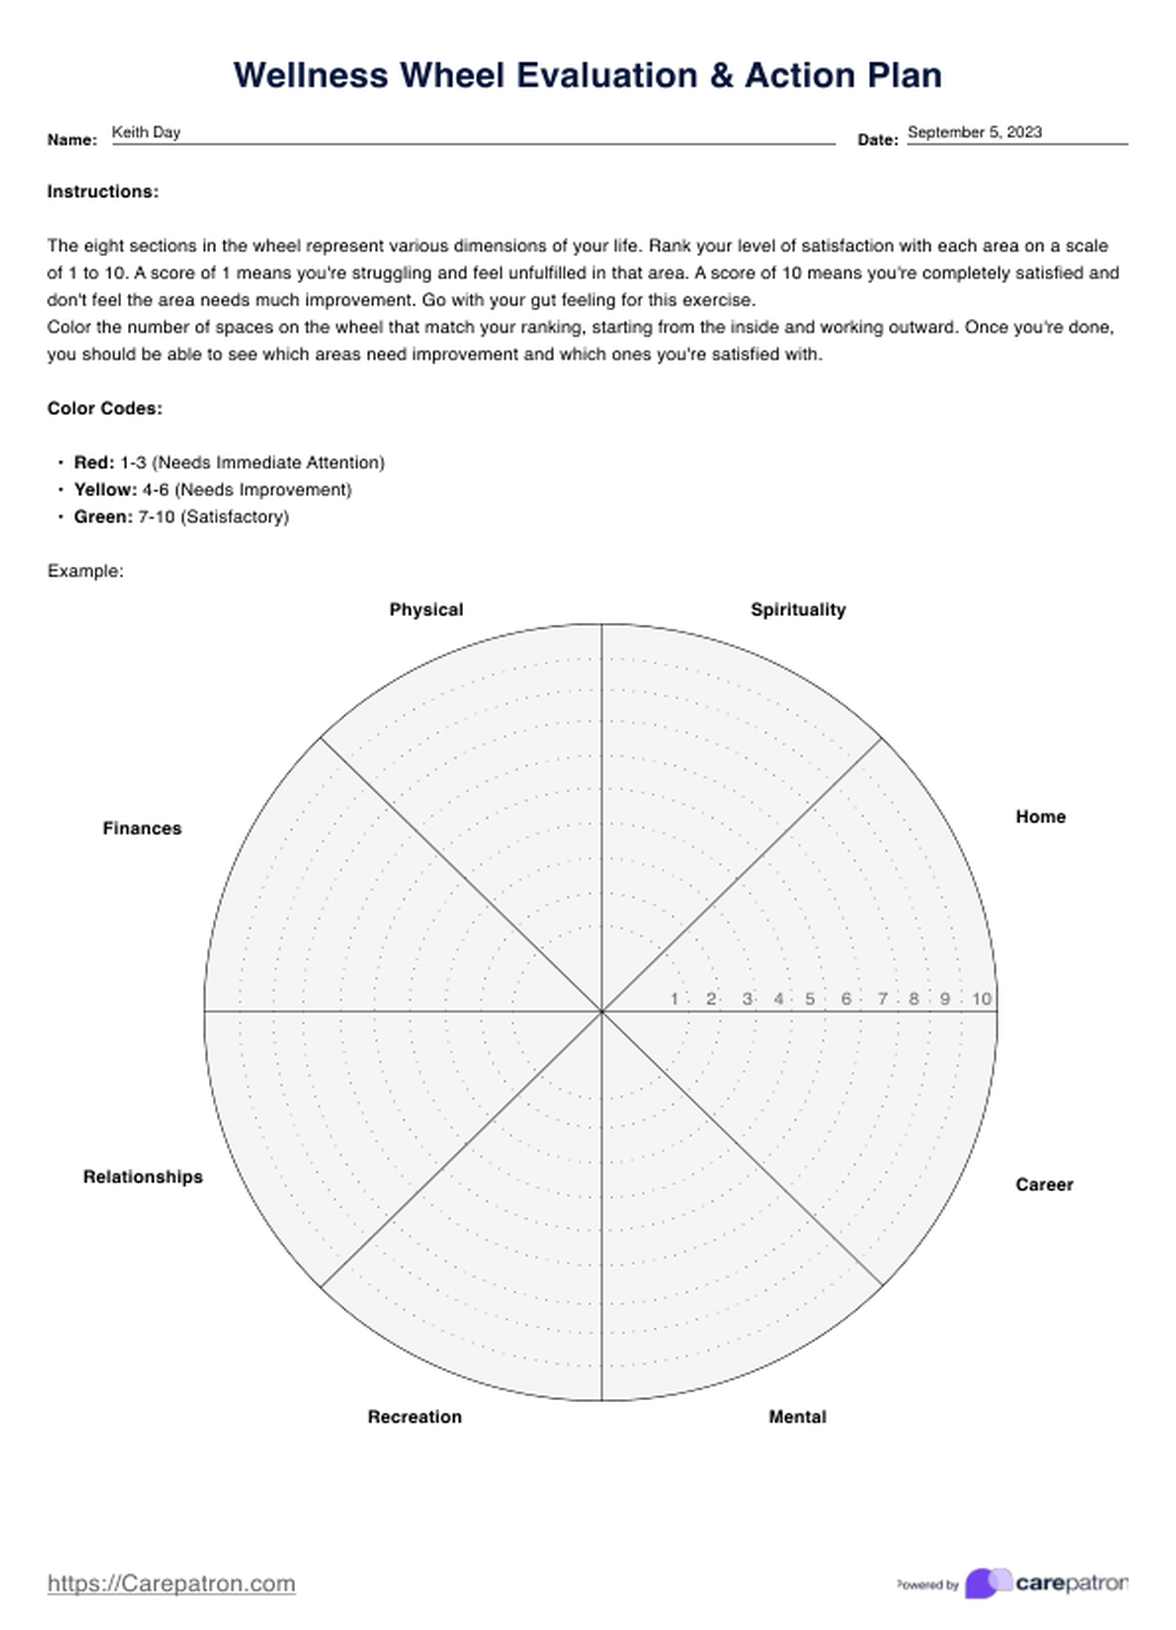 Wellness Wheels PDF Example